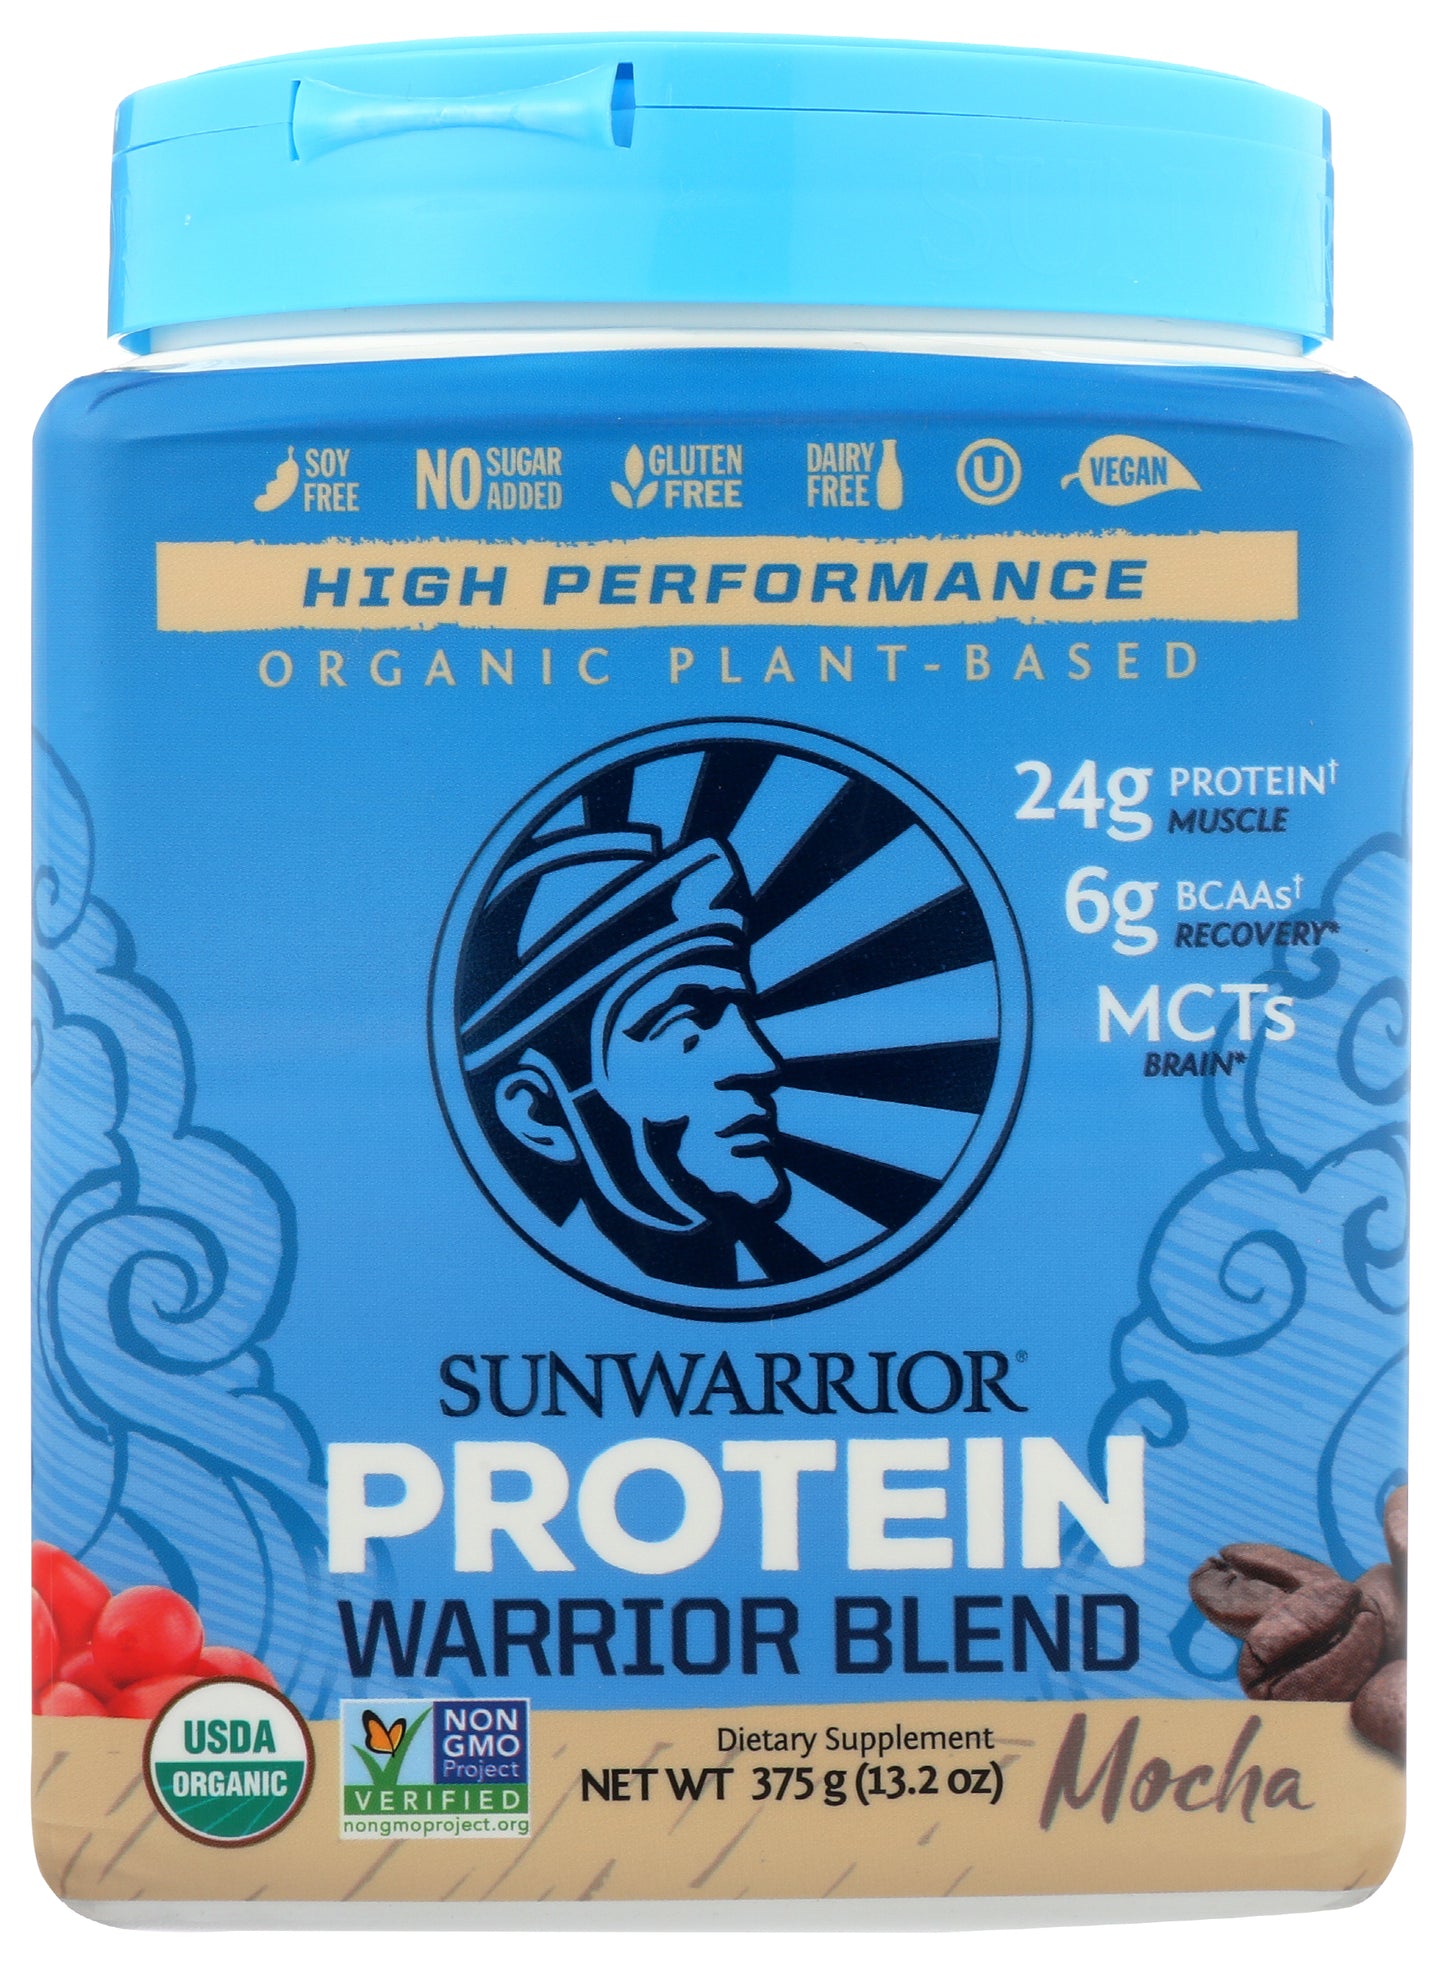 Sunwarrior Protein Powder Warrior Blend Mocha Flavor 375g Front of Bottle